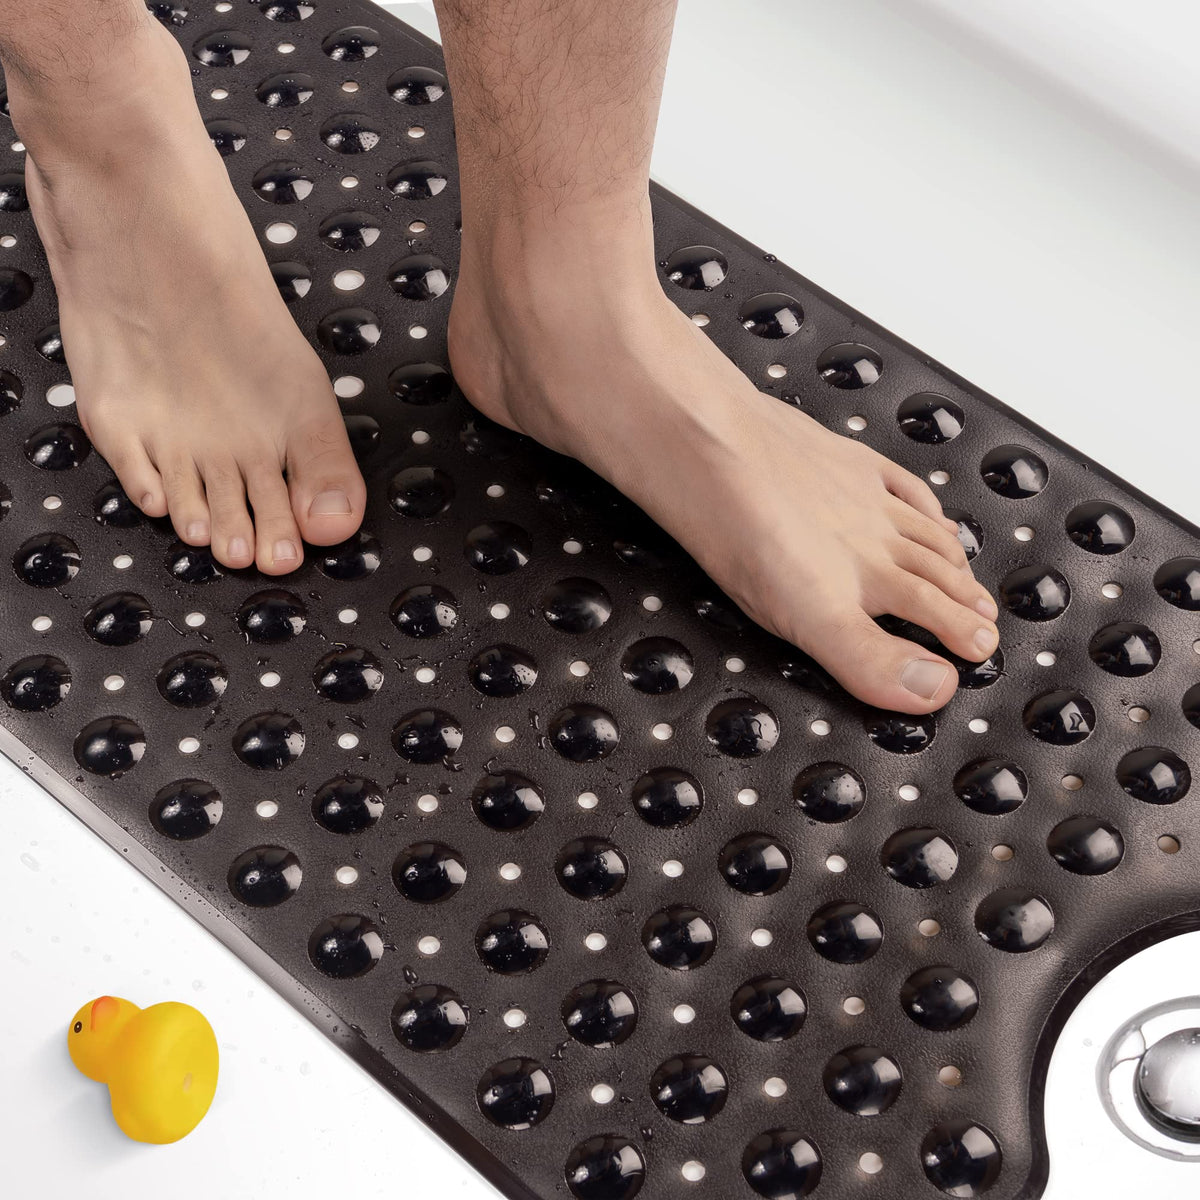 Sultan's Linens Rubber Bath Mat with Anti-Slip Honeycomb Texture BM29-T1 –  Good's Store Online